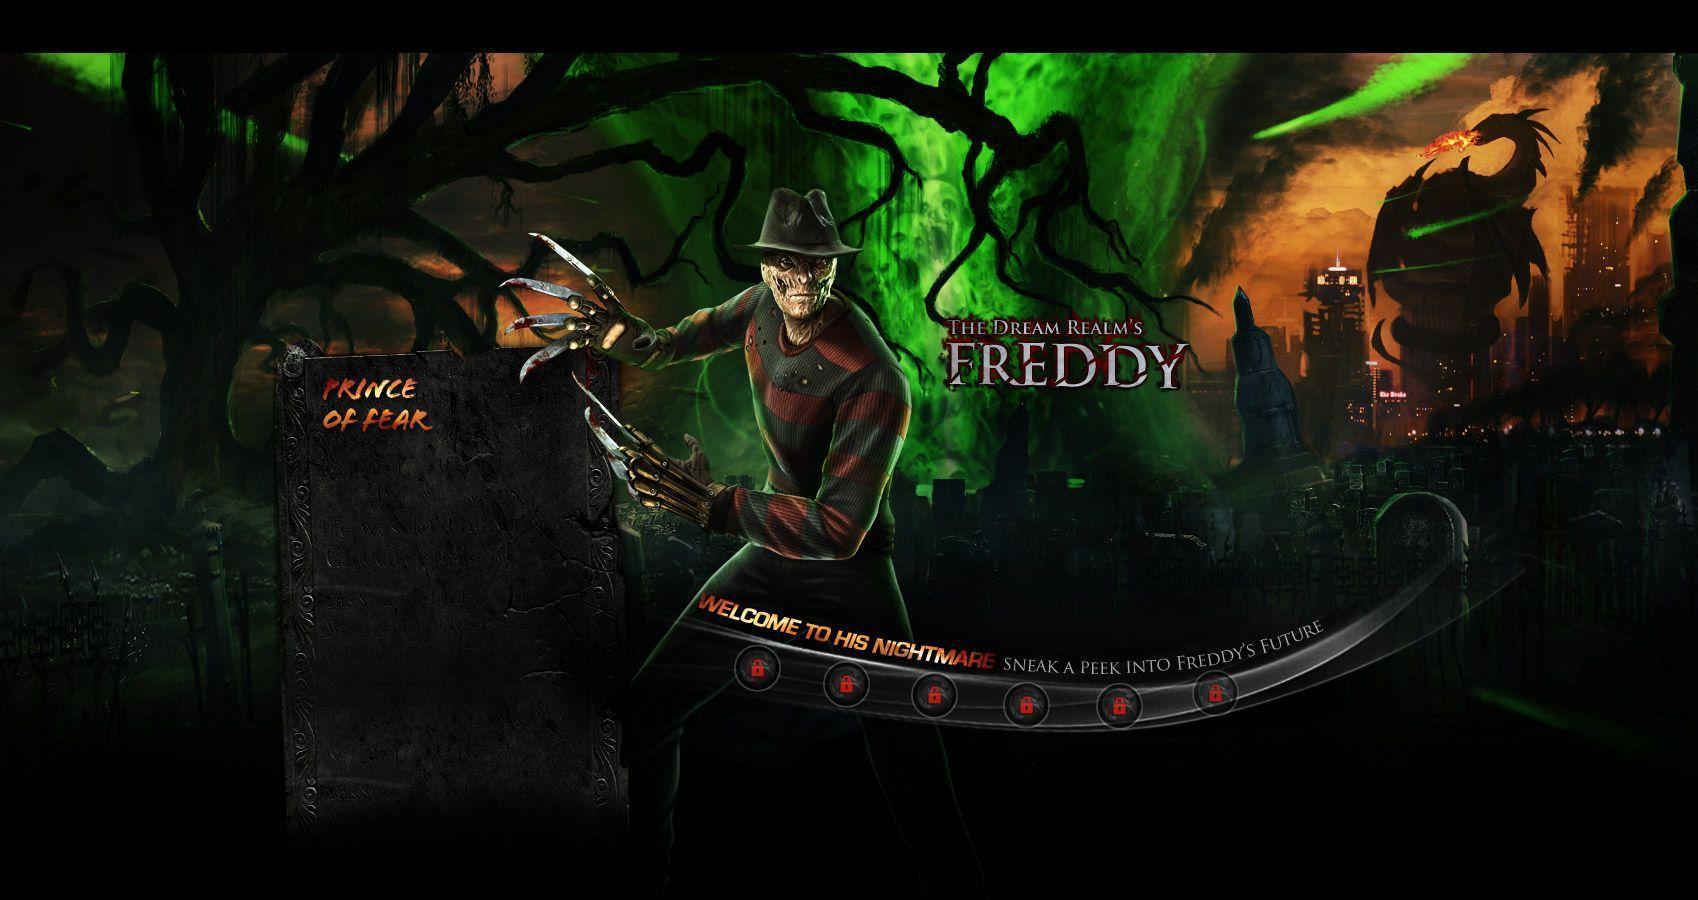 Freddy Krueger (Character)